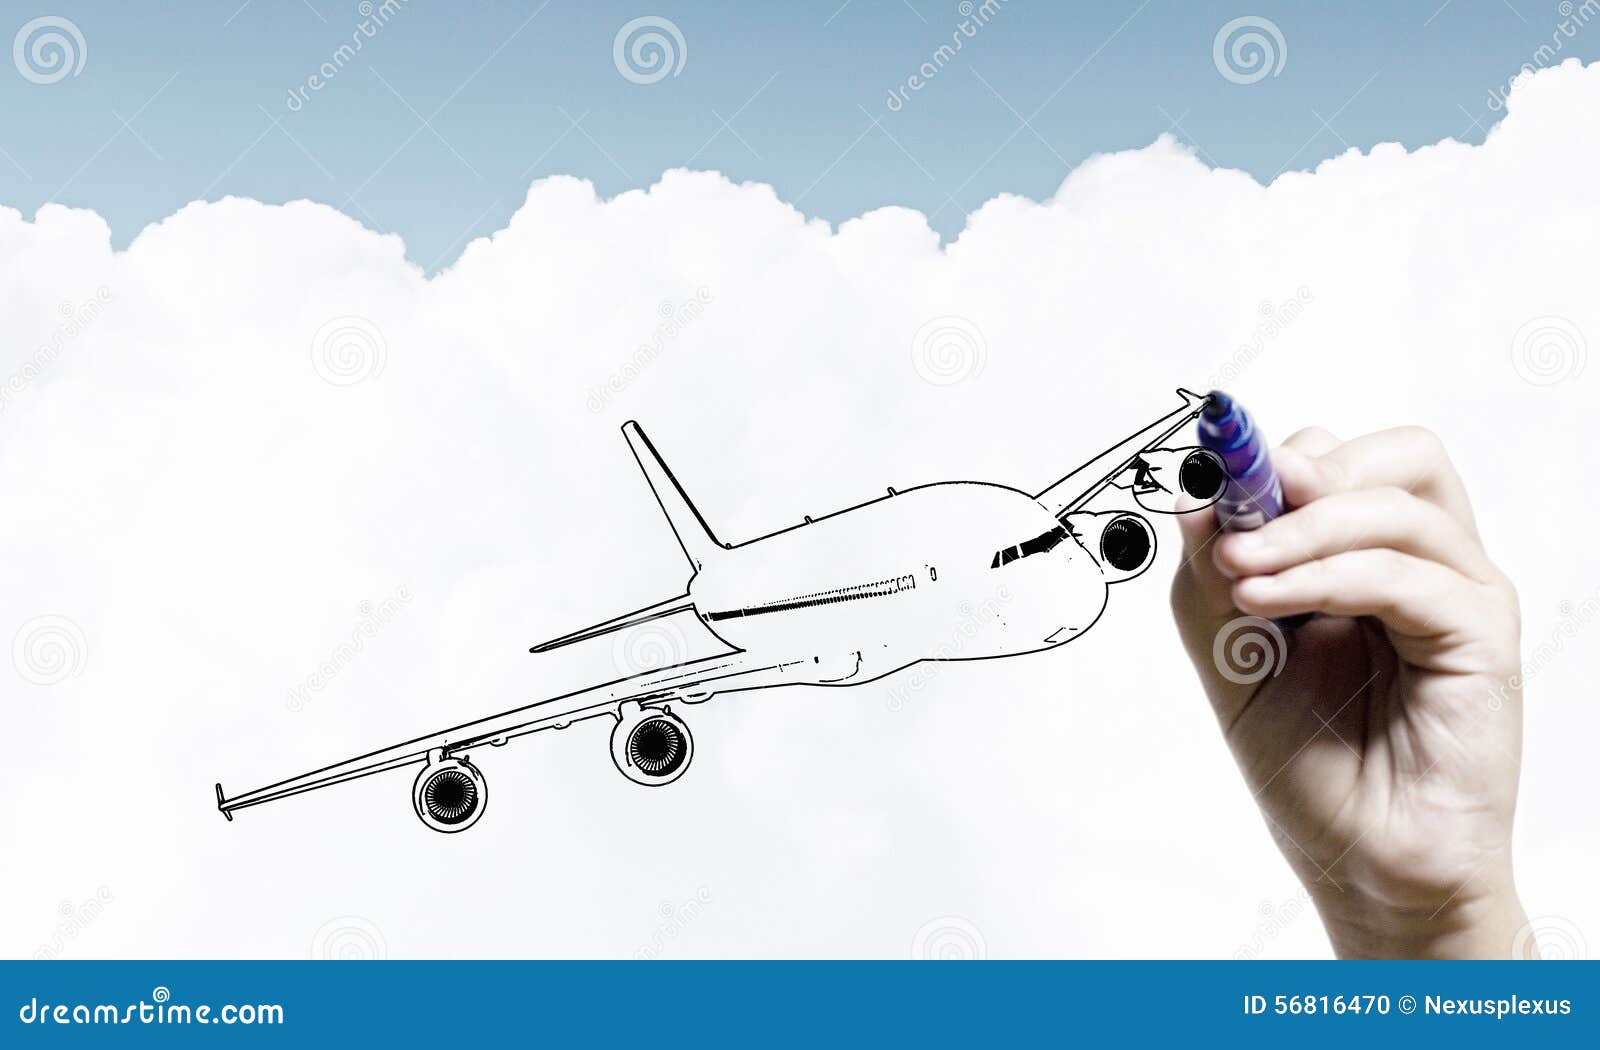 Drawn airplane stock photo. Image of modern, airplane - 56816470